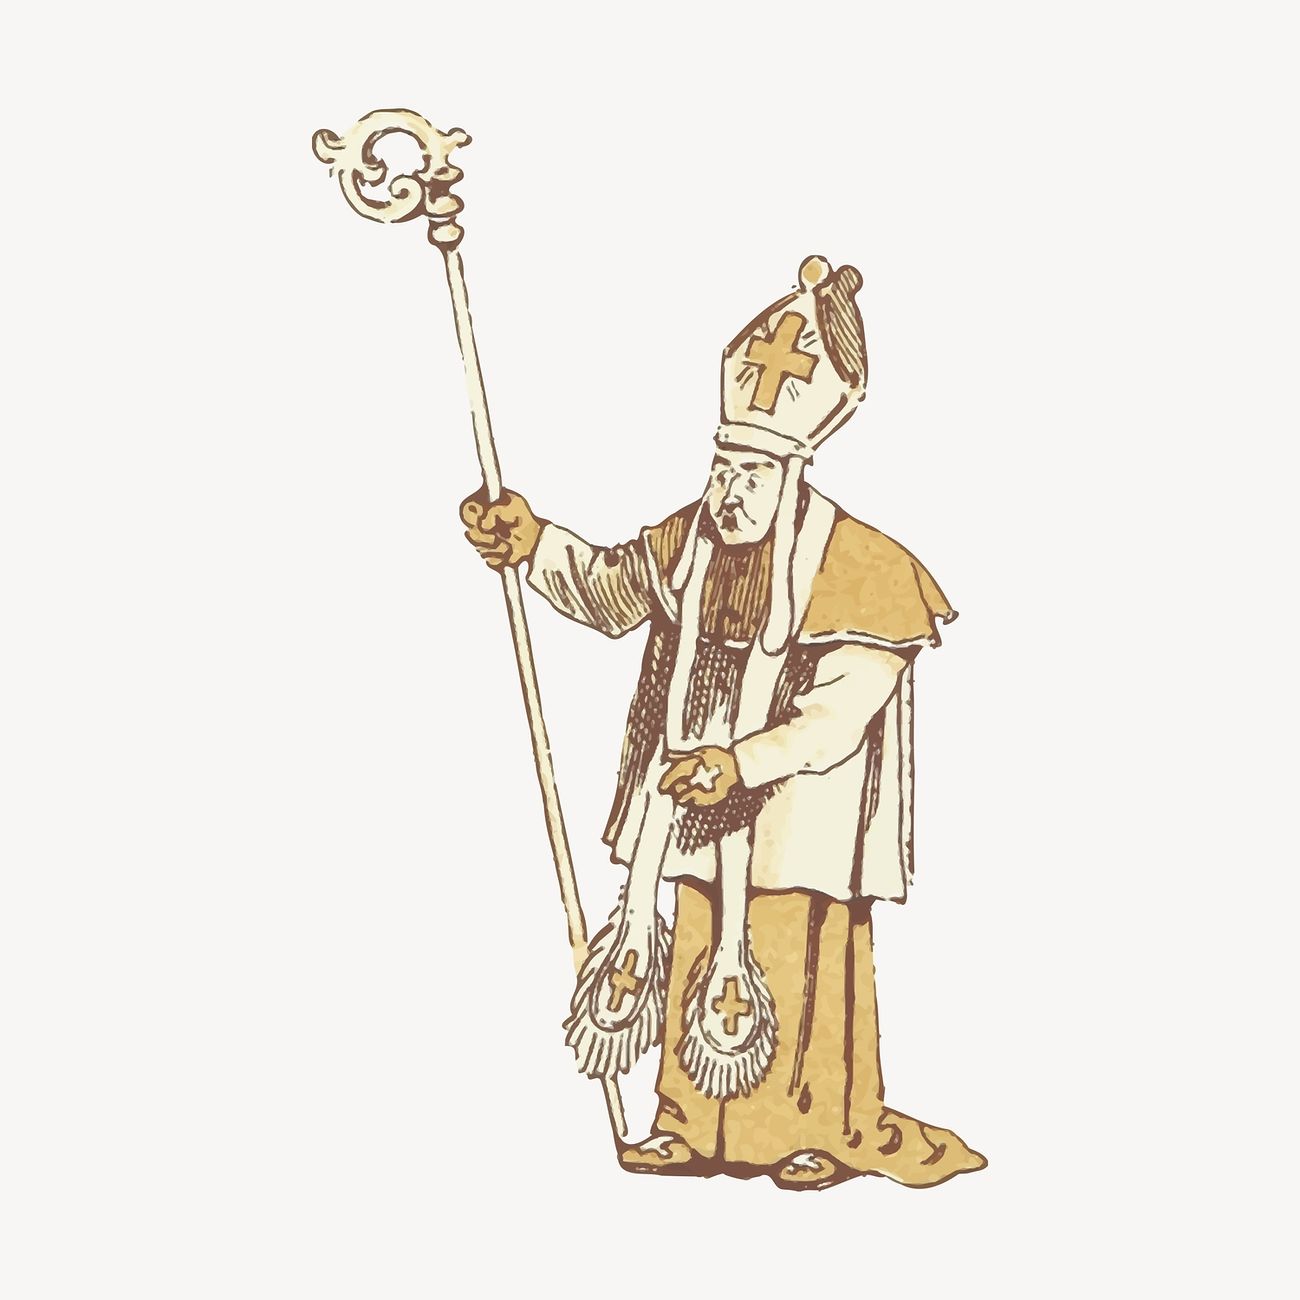 Bishop drawing, Christianity religion illustration